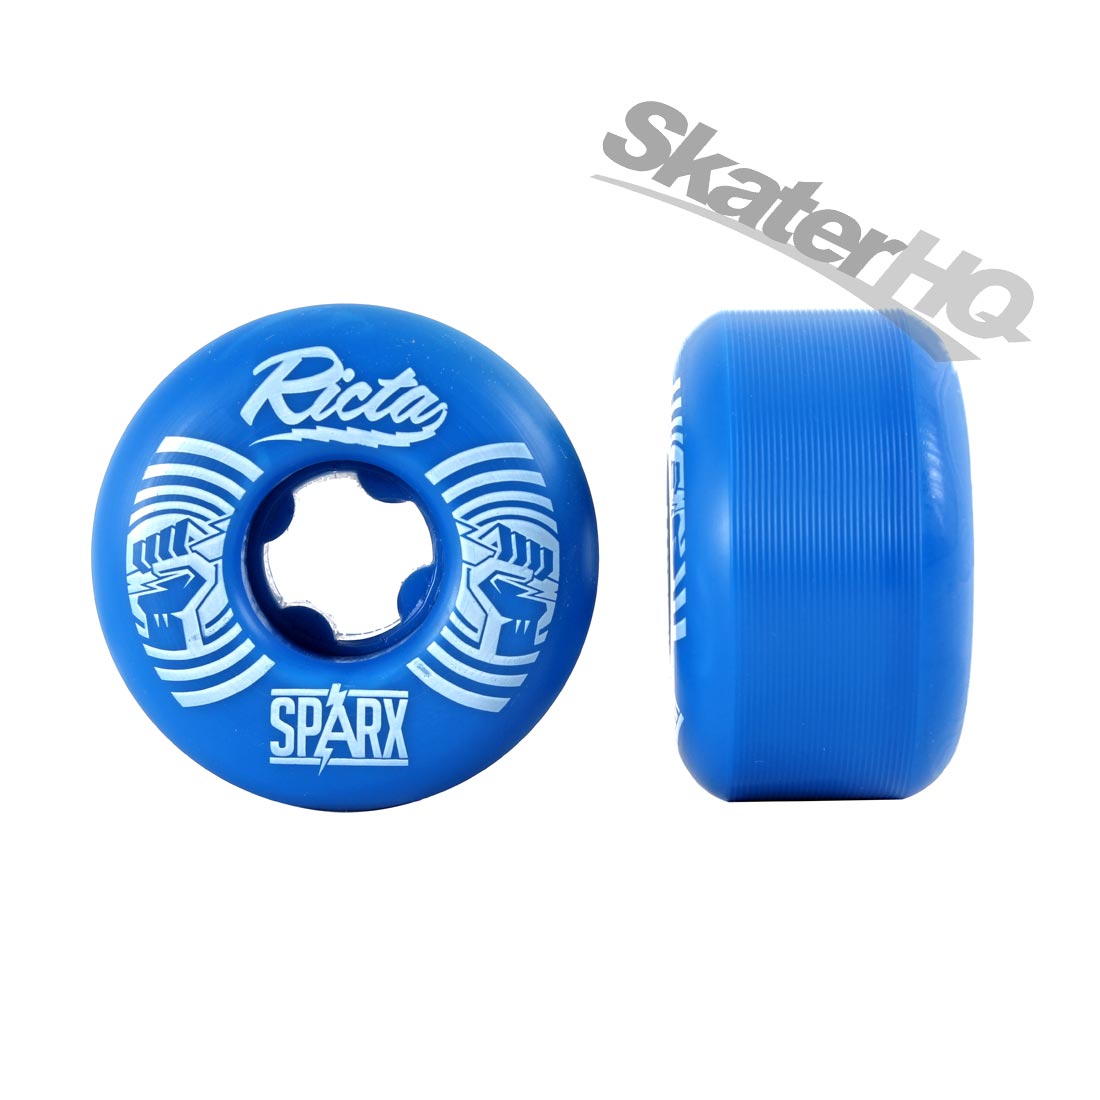 Ricta Sparx Shockwaves 54mm Blue Skateboard Wheels